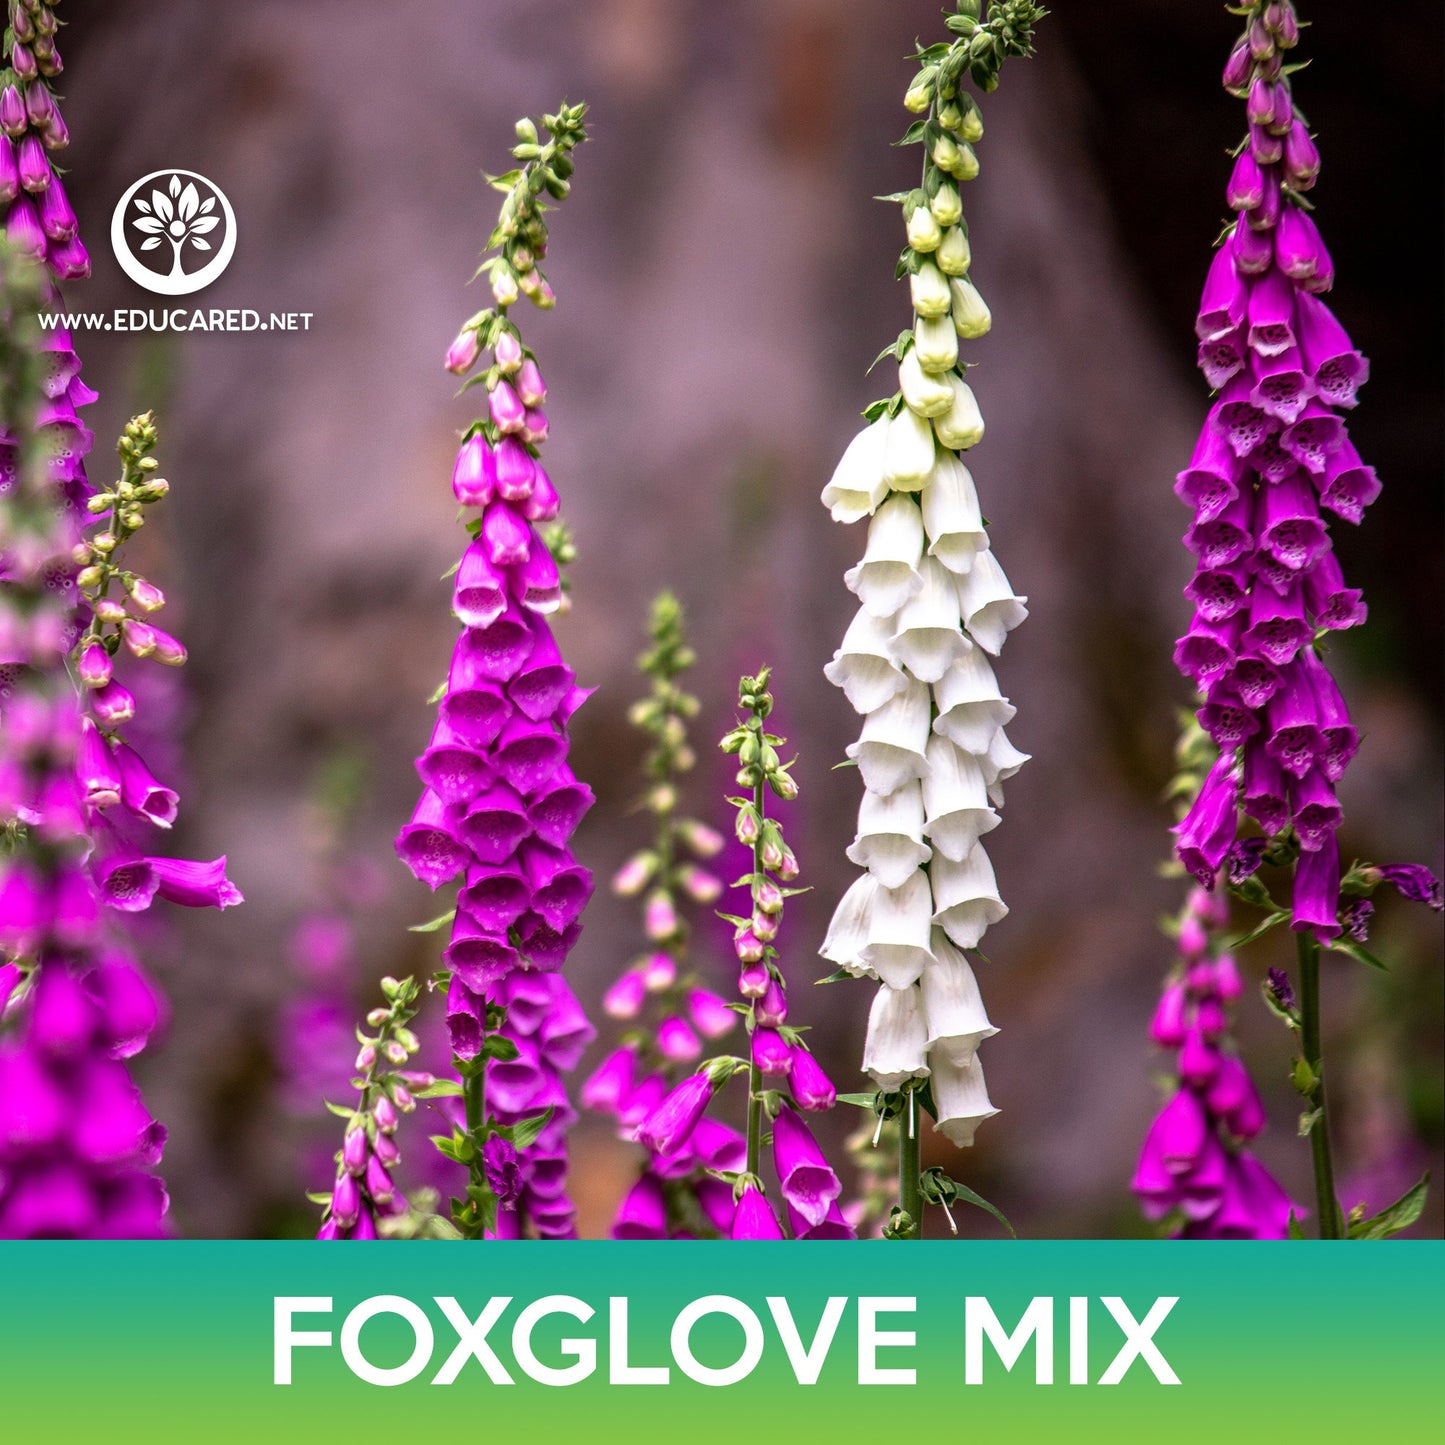 Foxglove Flower Mix Seeds, Digitalis purpurea